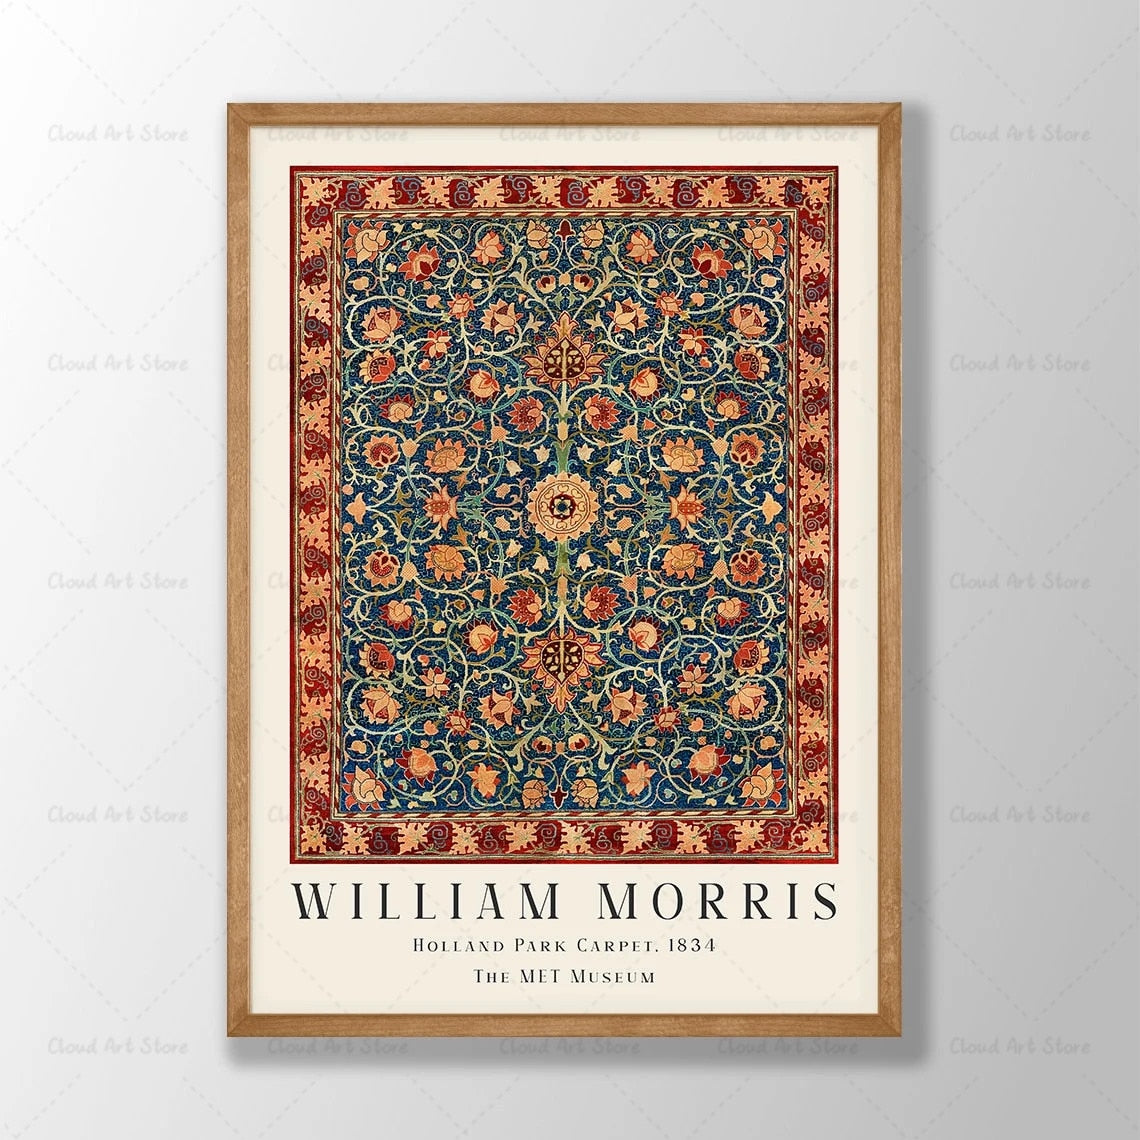 CORX Designs - William Morris Flower Floral Wall Art Canvas - Review